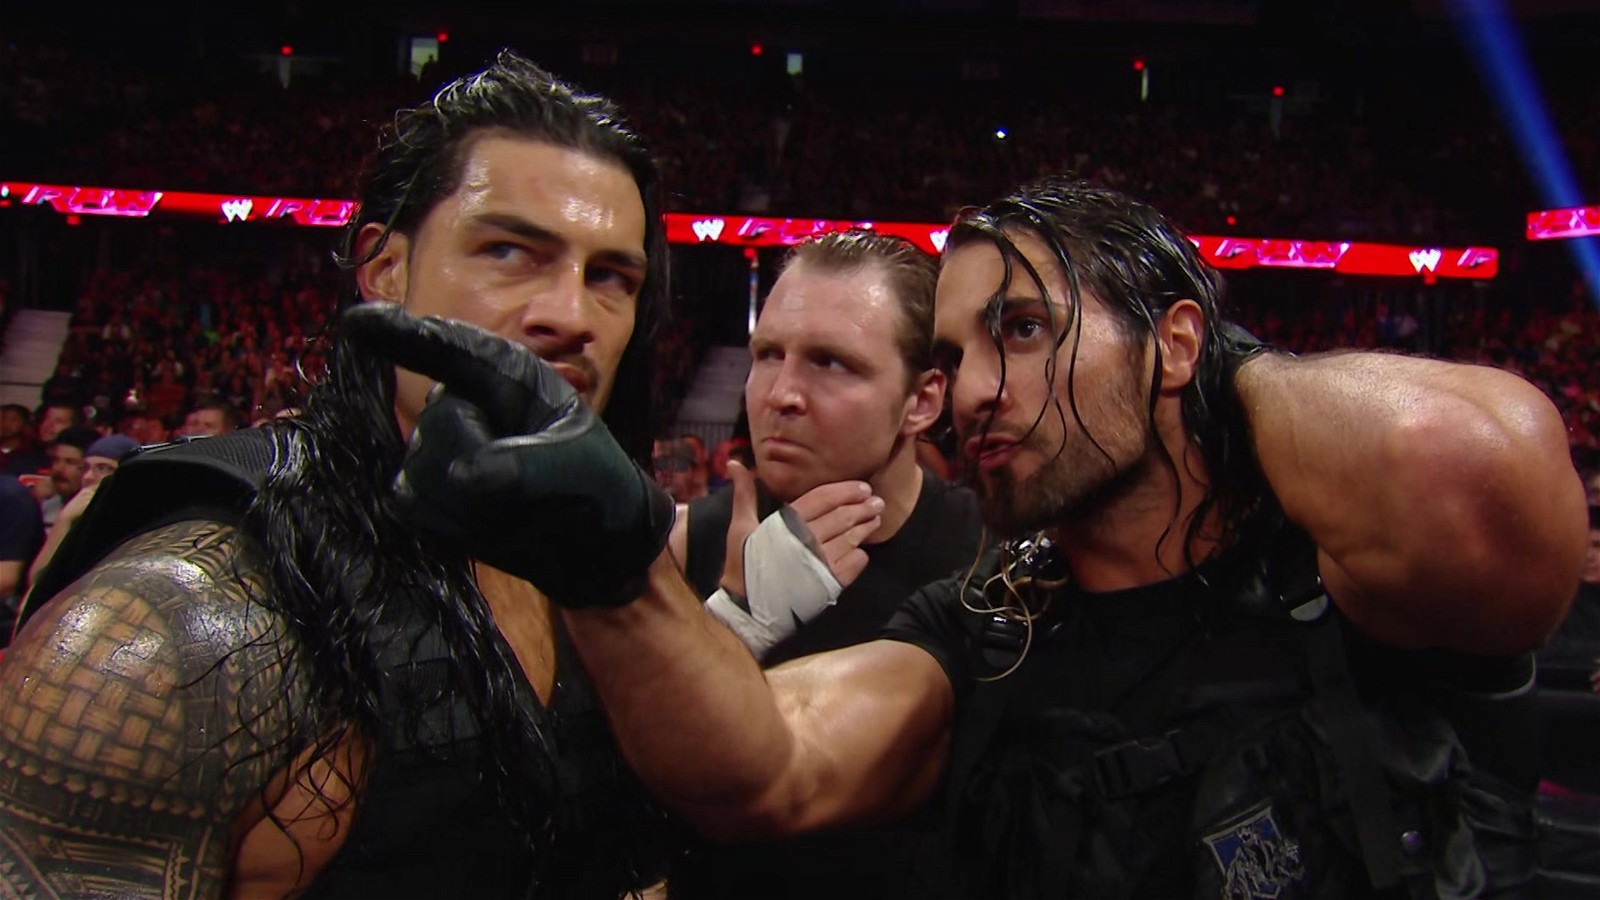 The Shield Trio: Dean Ambrose, Roman Reigns, and Seth Rollins